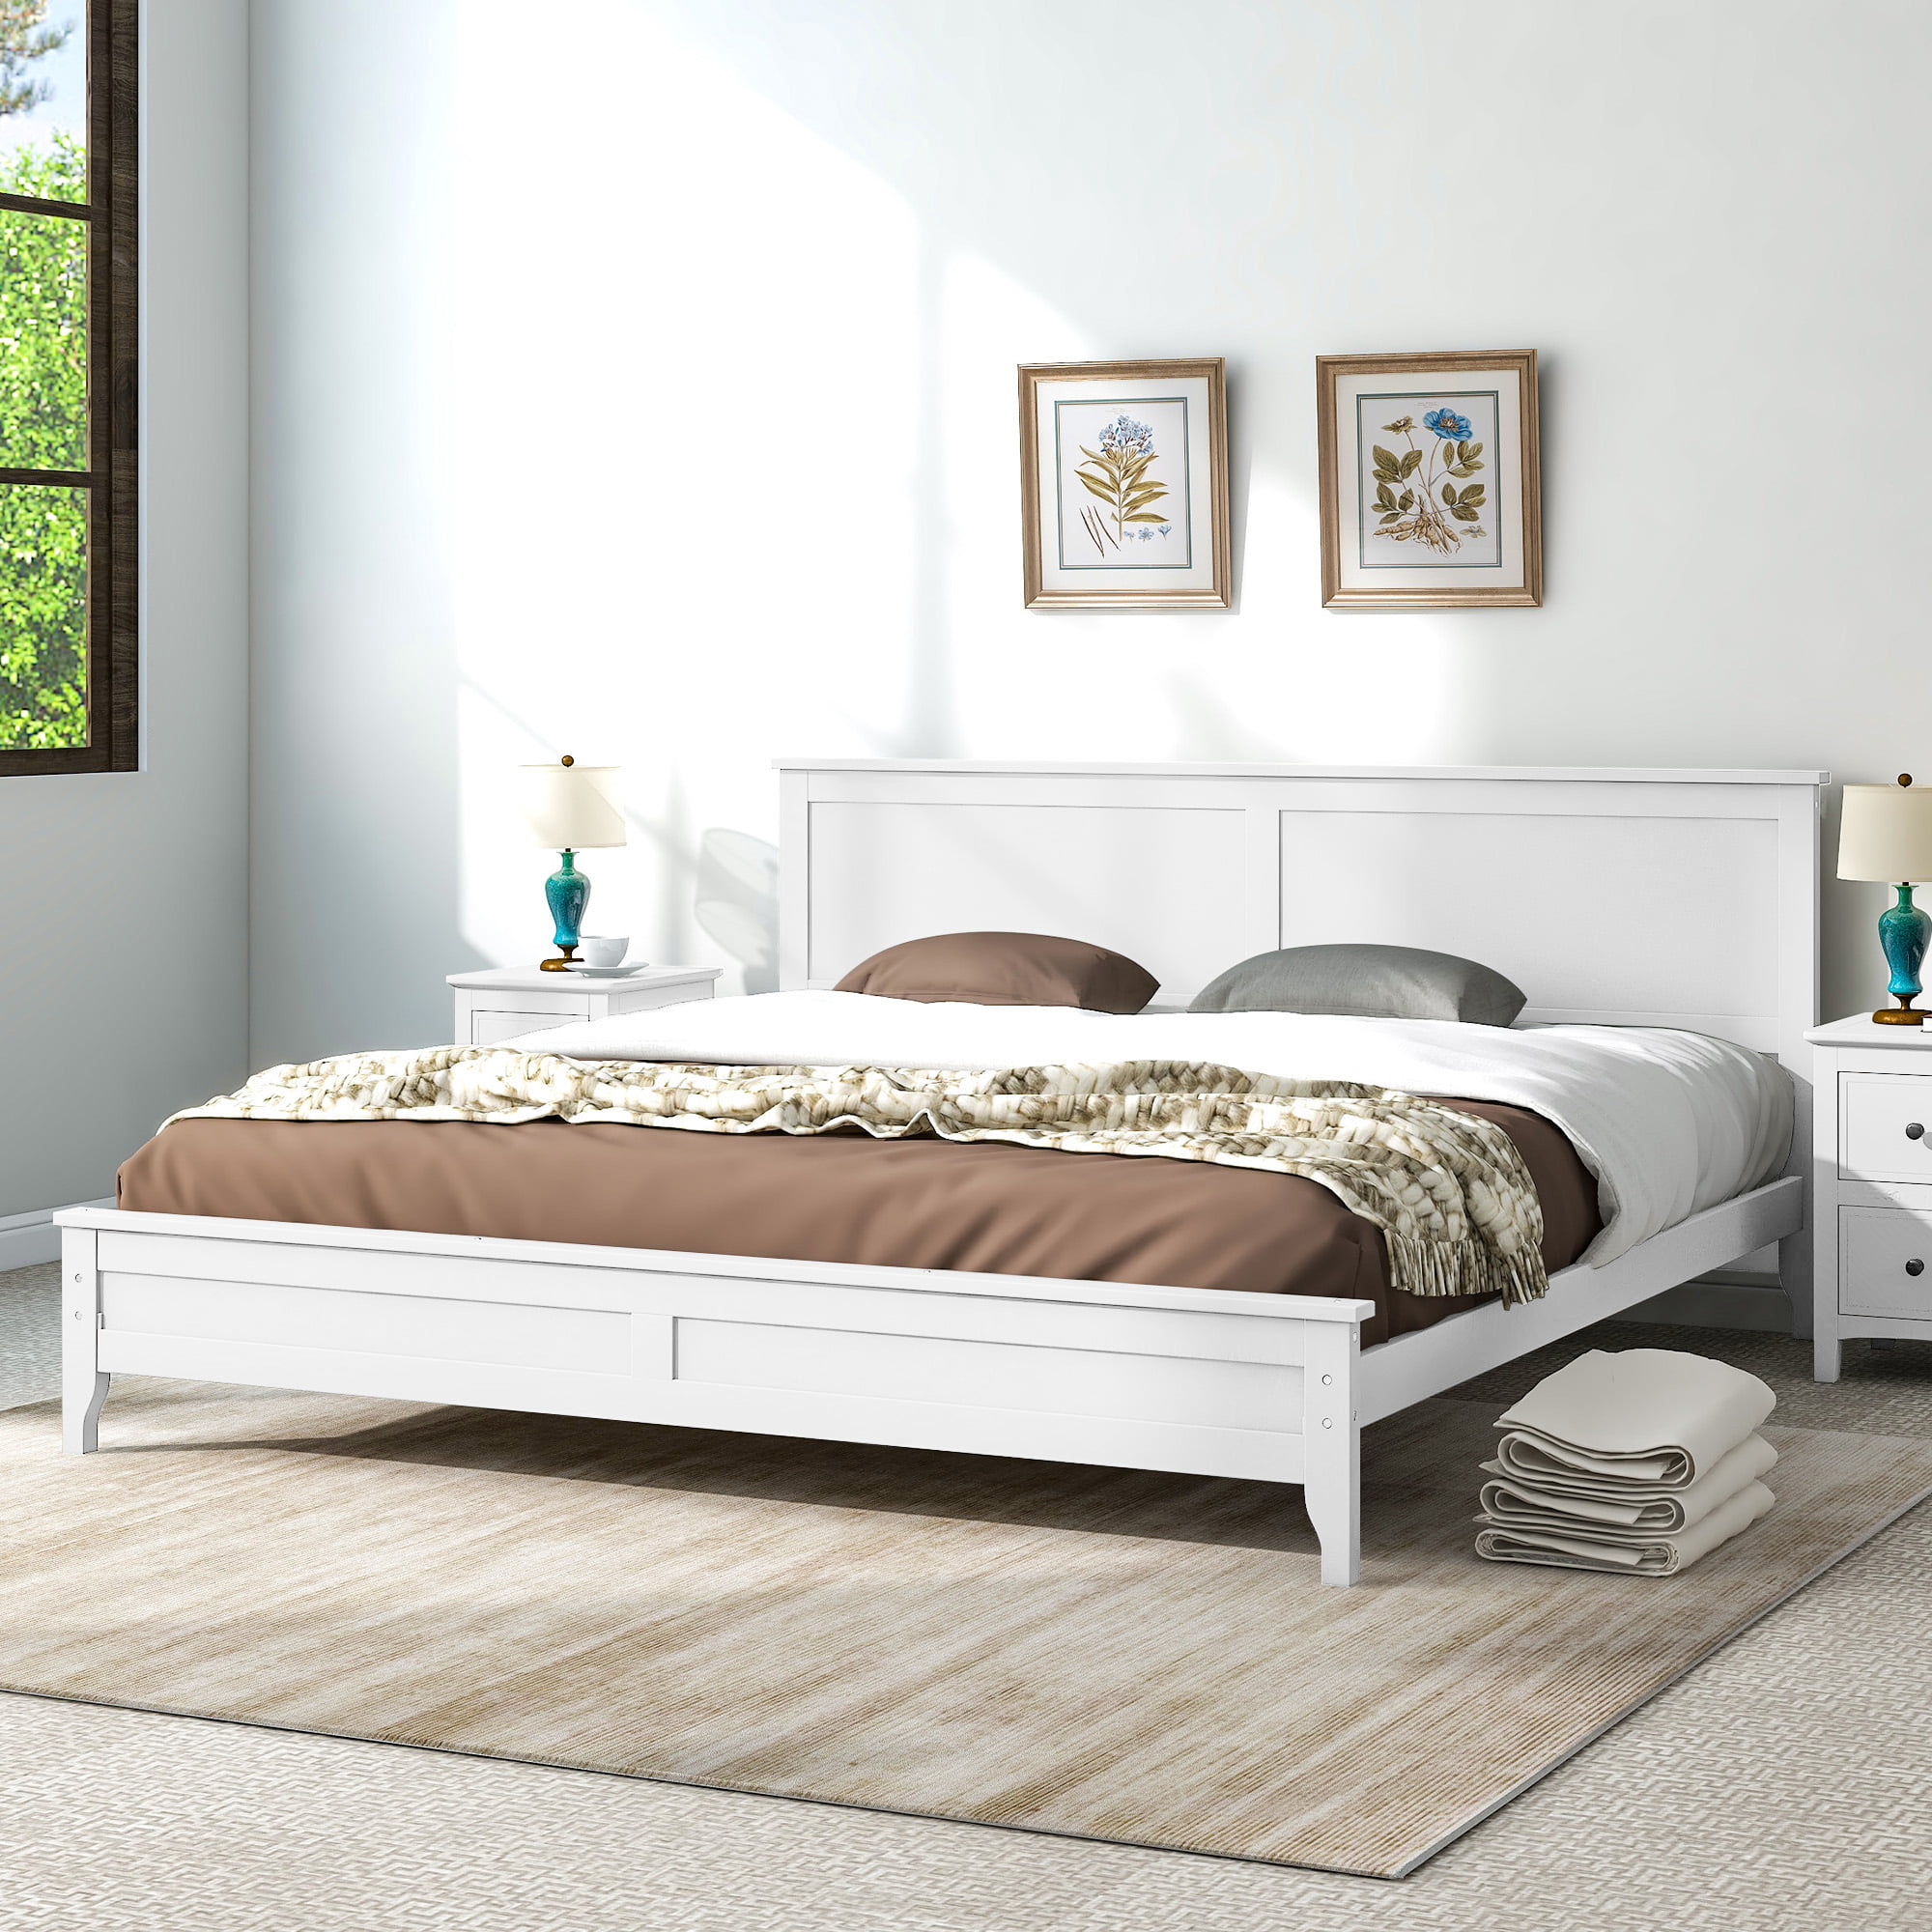 King Size Bed Frame With Headboard, Platform Bed Frame Solid Wood With  Headboard, 600Lbs Weight Capacity, White, Lj2081 - Walmart.Com